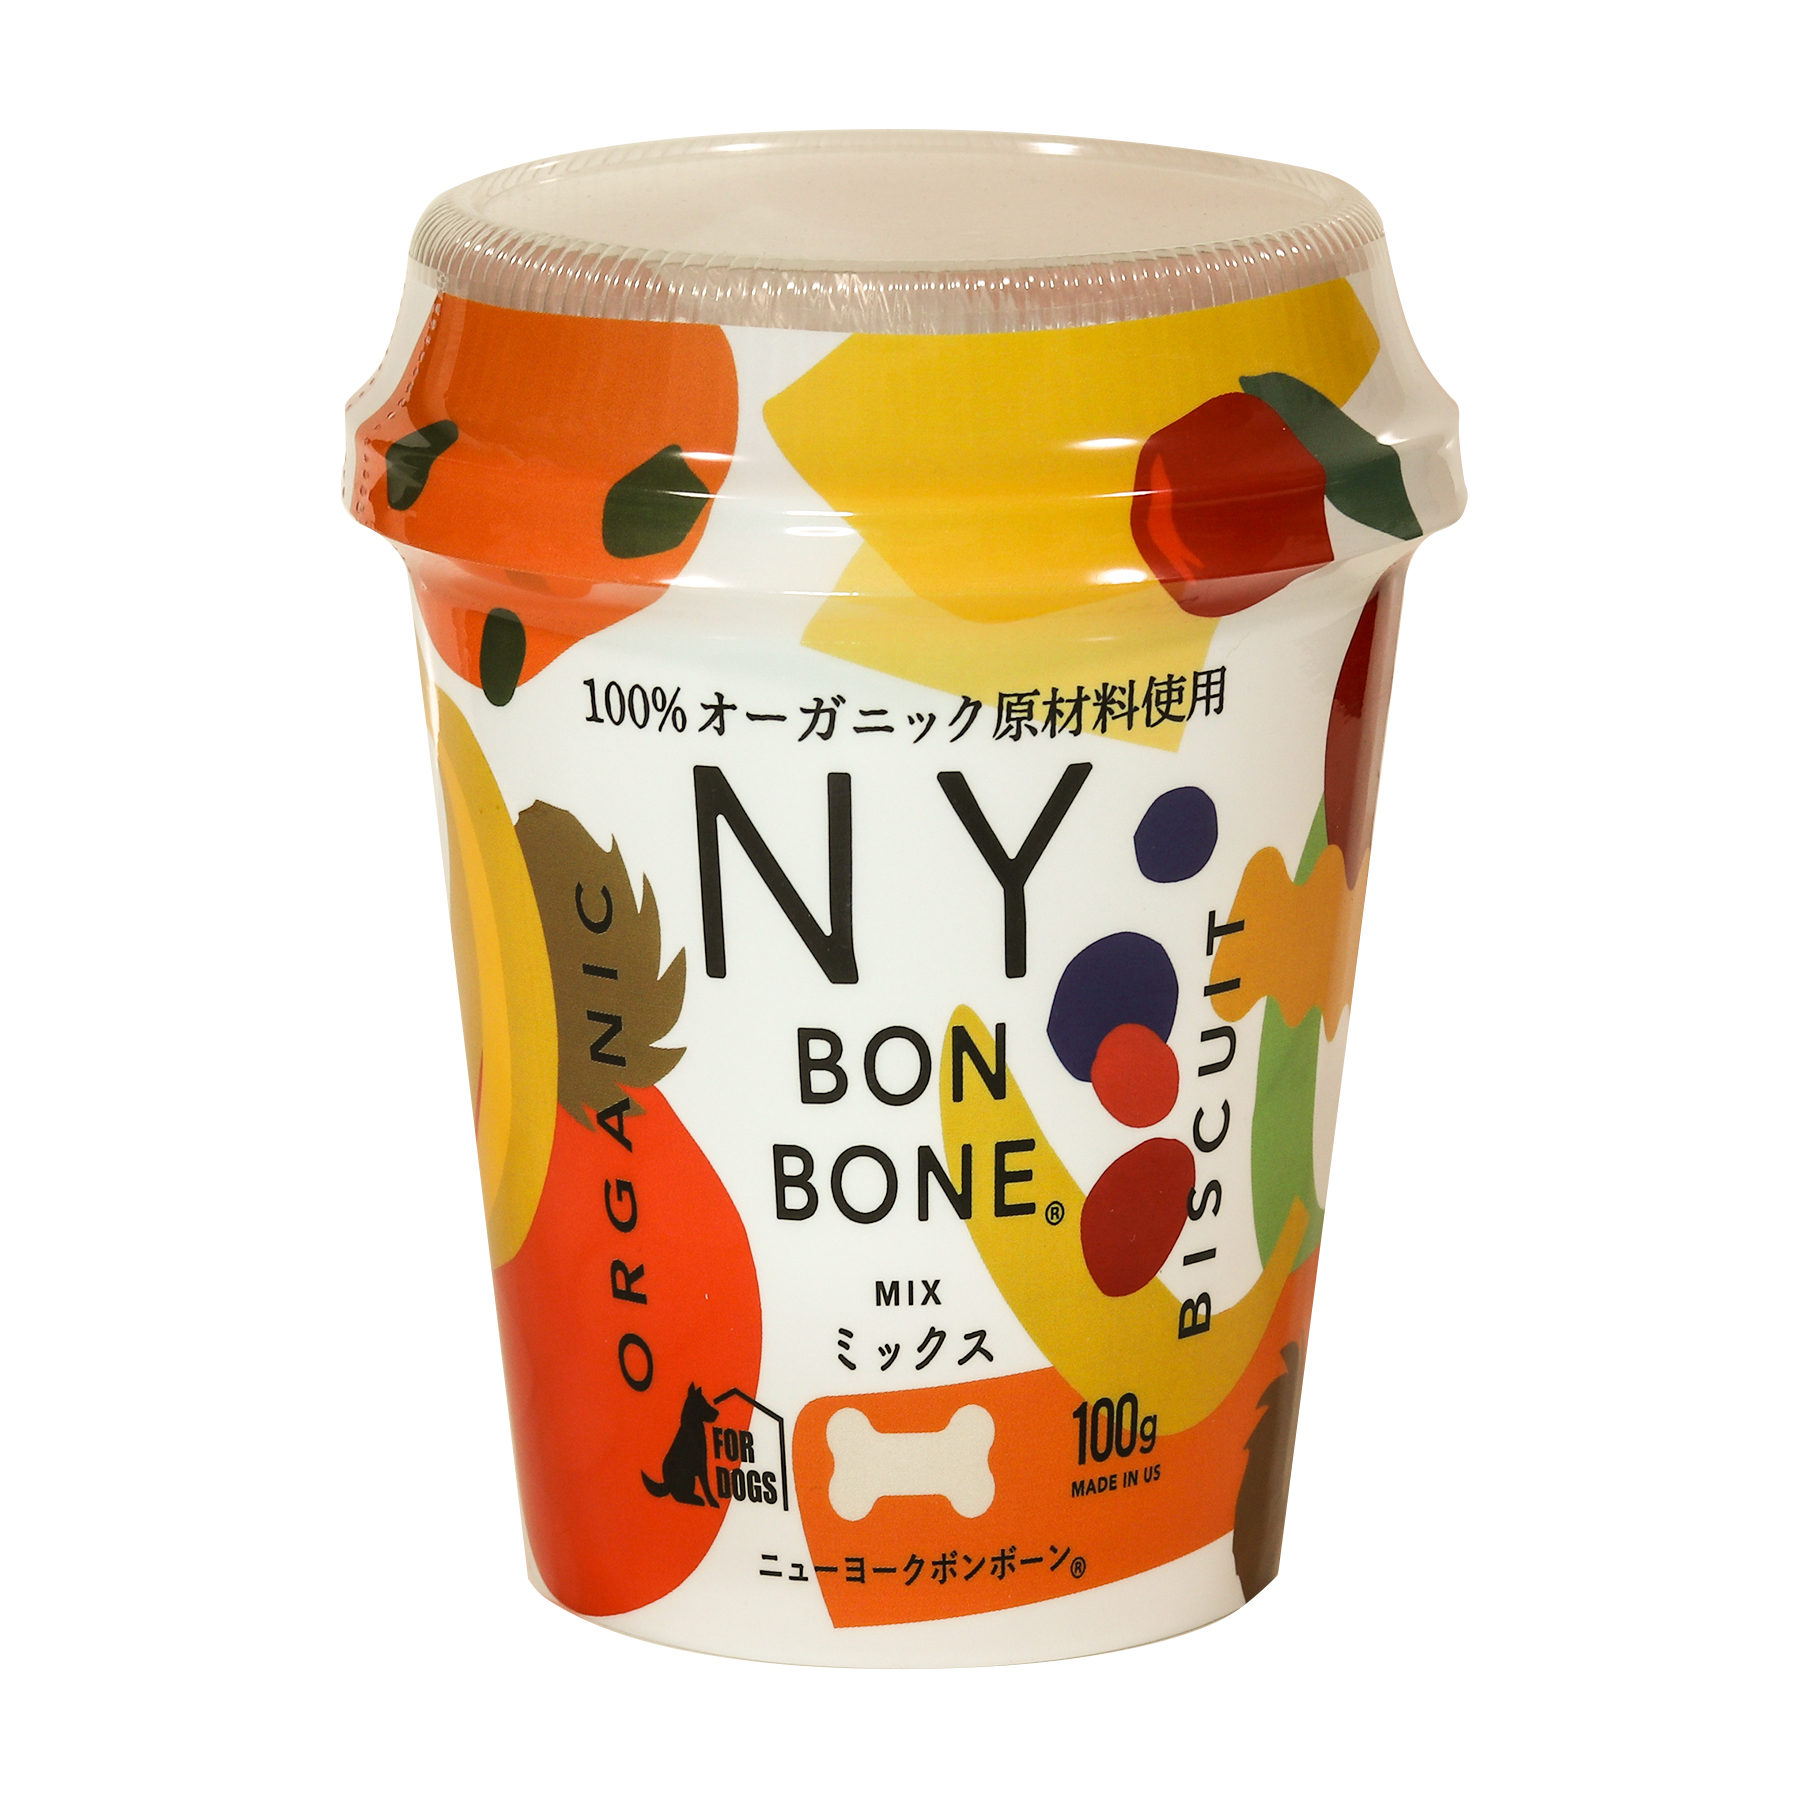 NY BON BONEにカップ型パッケージが登場